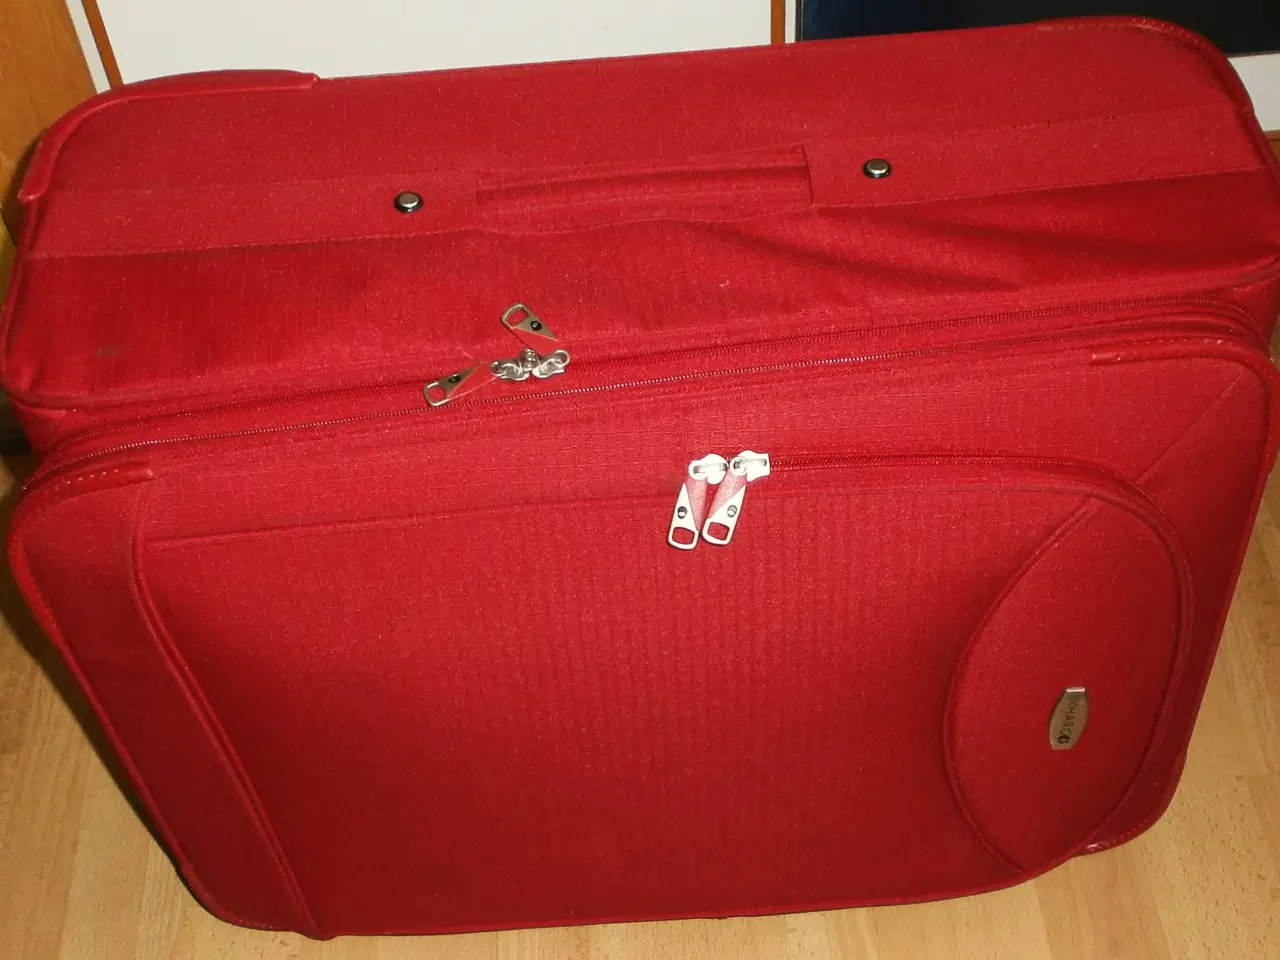 Billede 1 - Ny Rød Kuffert Sælges